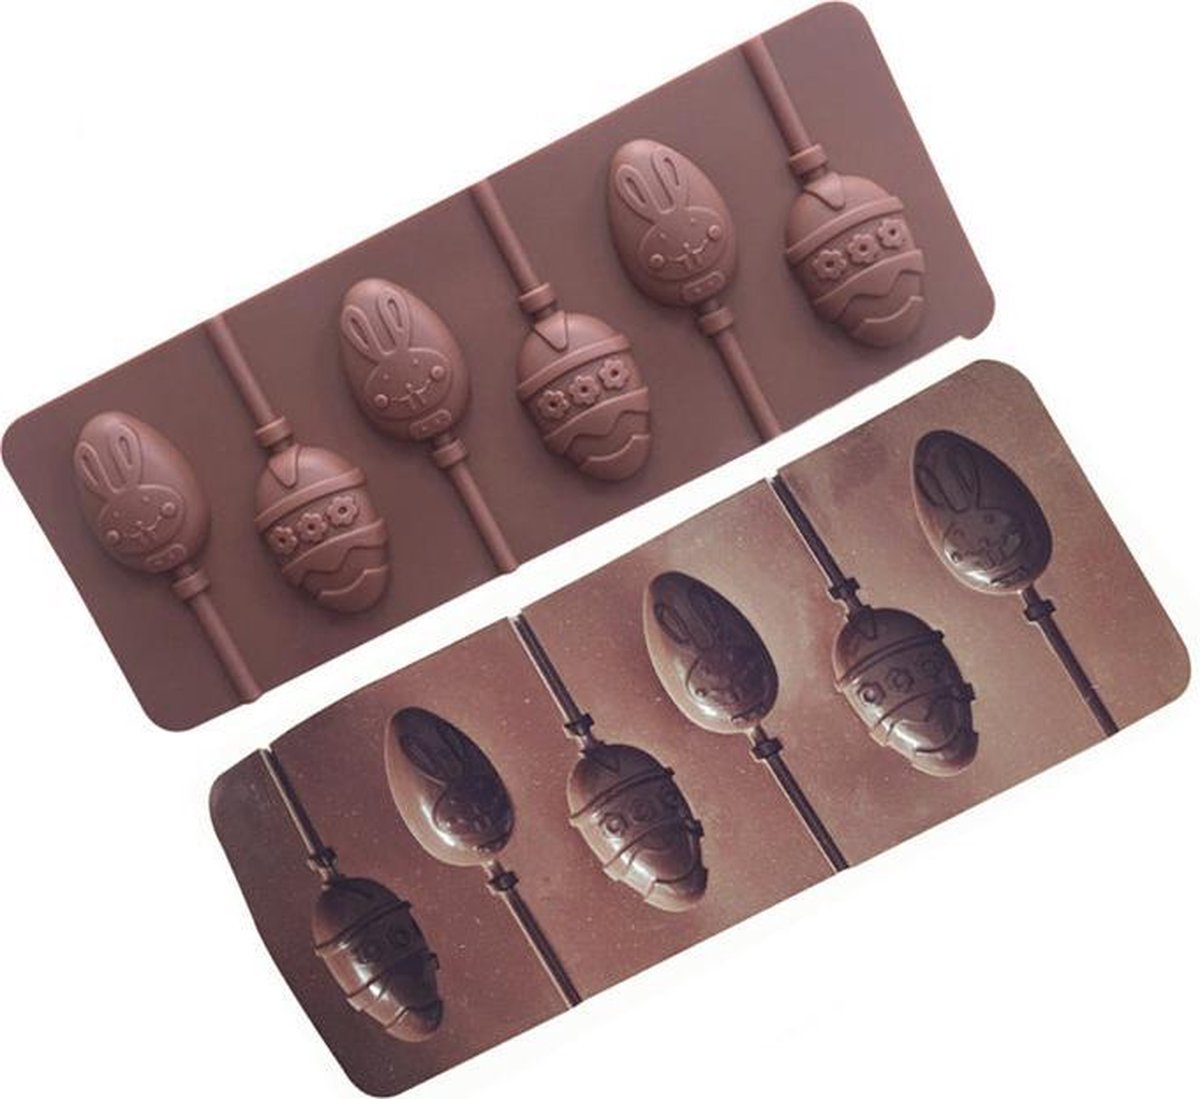 ProductGoods - Siliconen Chocoladevorm In Paasthema - Chocolade Mal Fondant Bonbonvorm + Gratis Stokjes - Ijsblokjesvorm